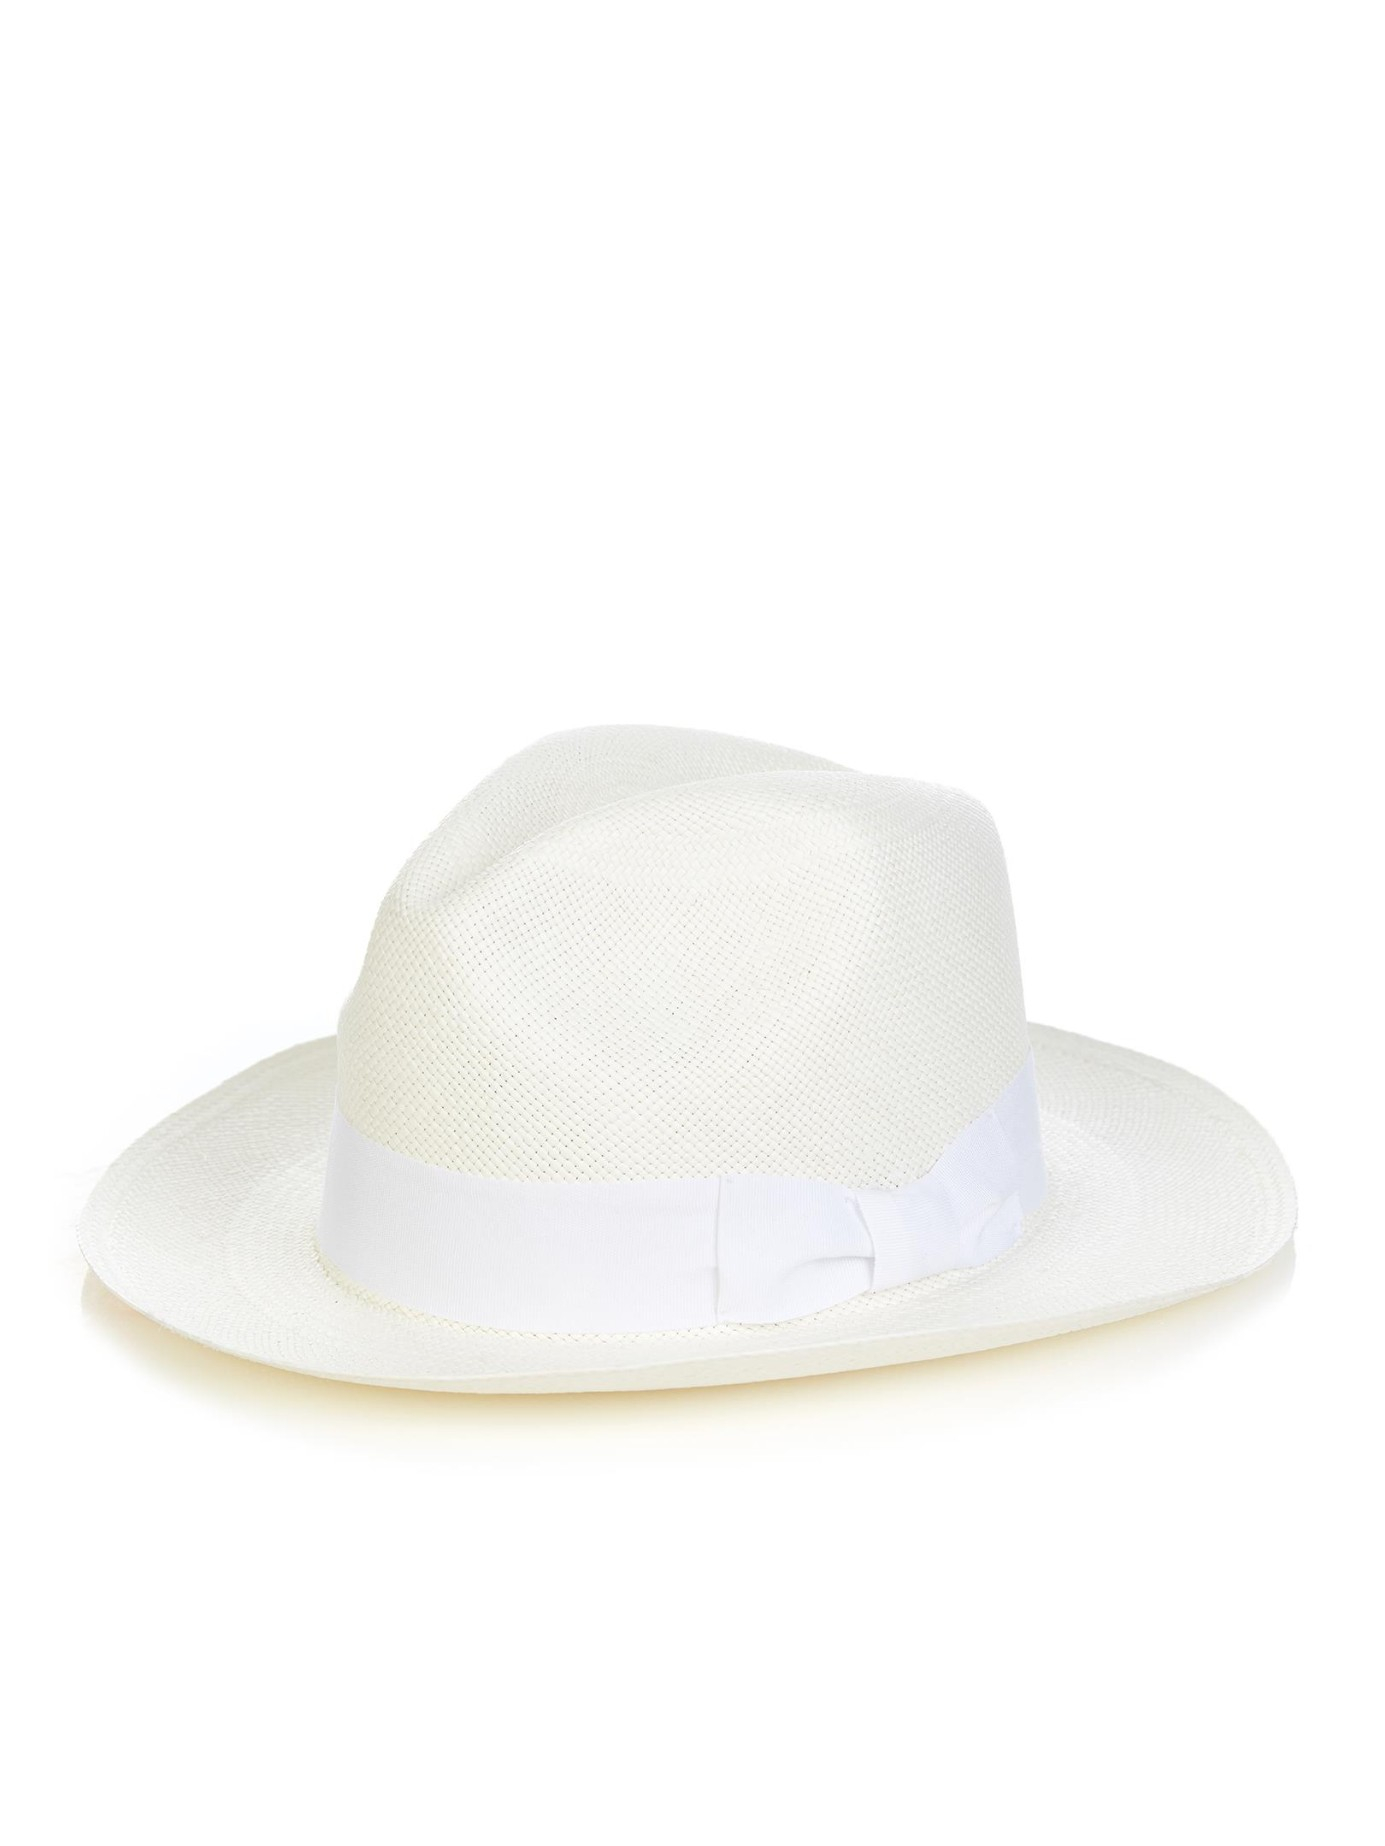 Lyst - Sensi Studio Classic Panama Italian-Bow Straw Hat in White